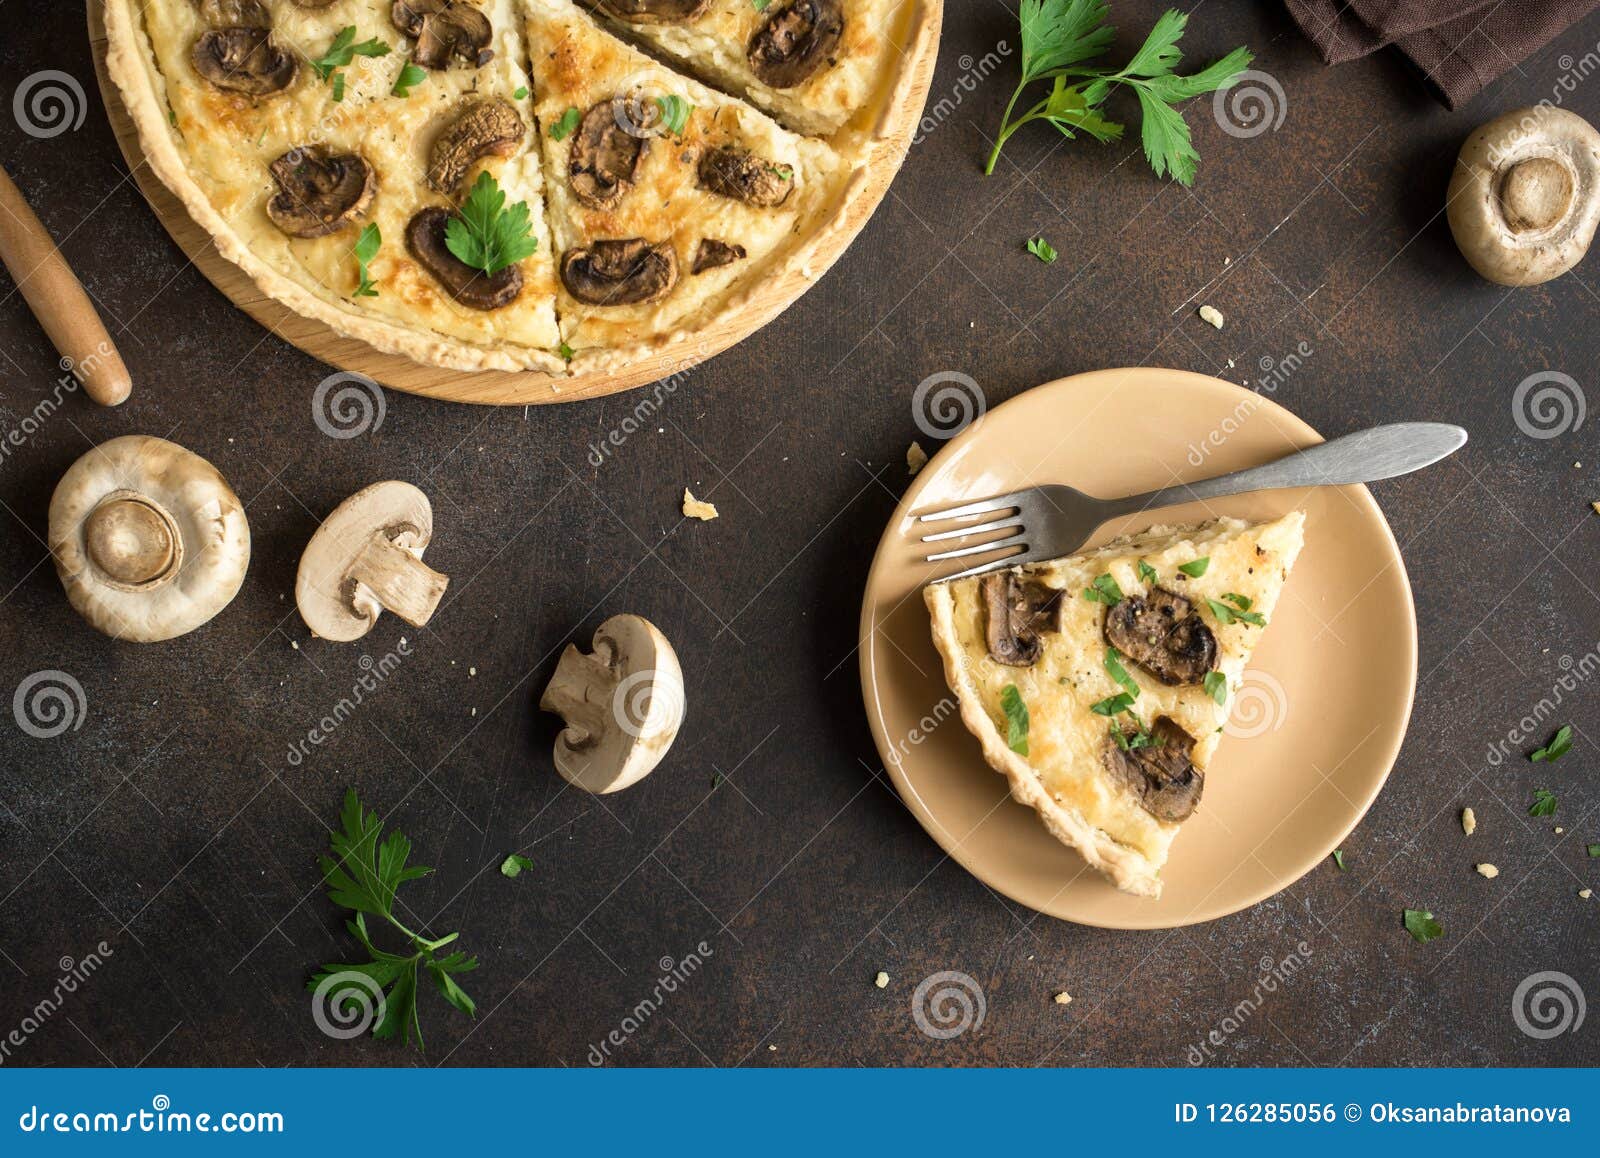 пицца пирог грибная фото 90